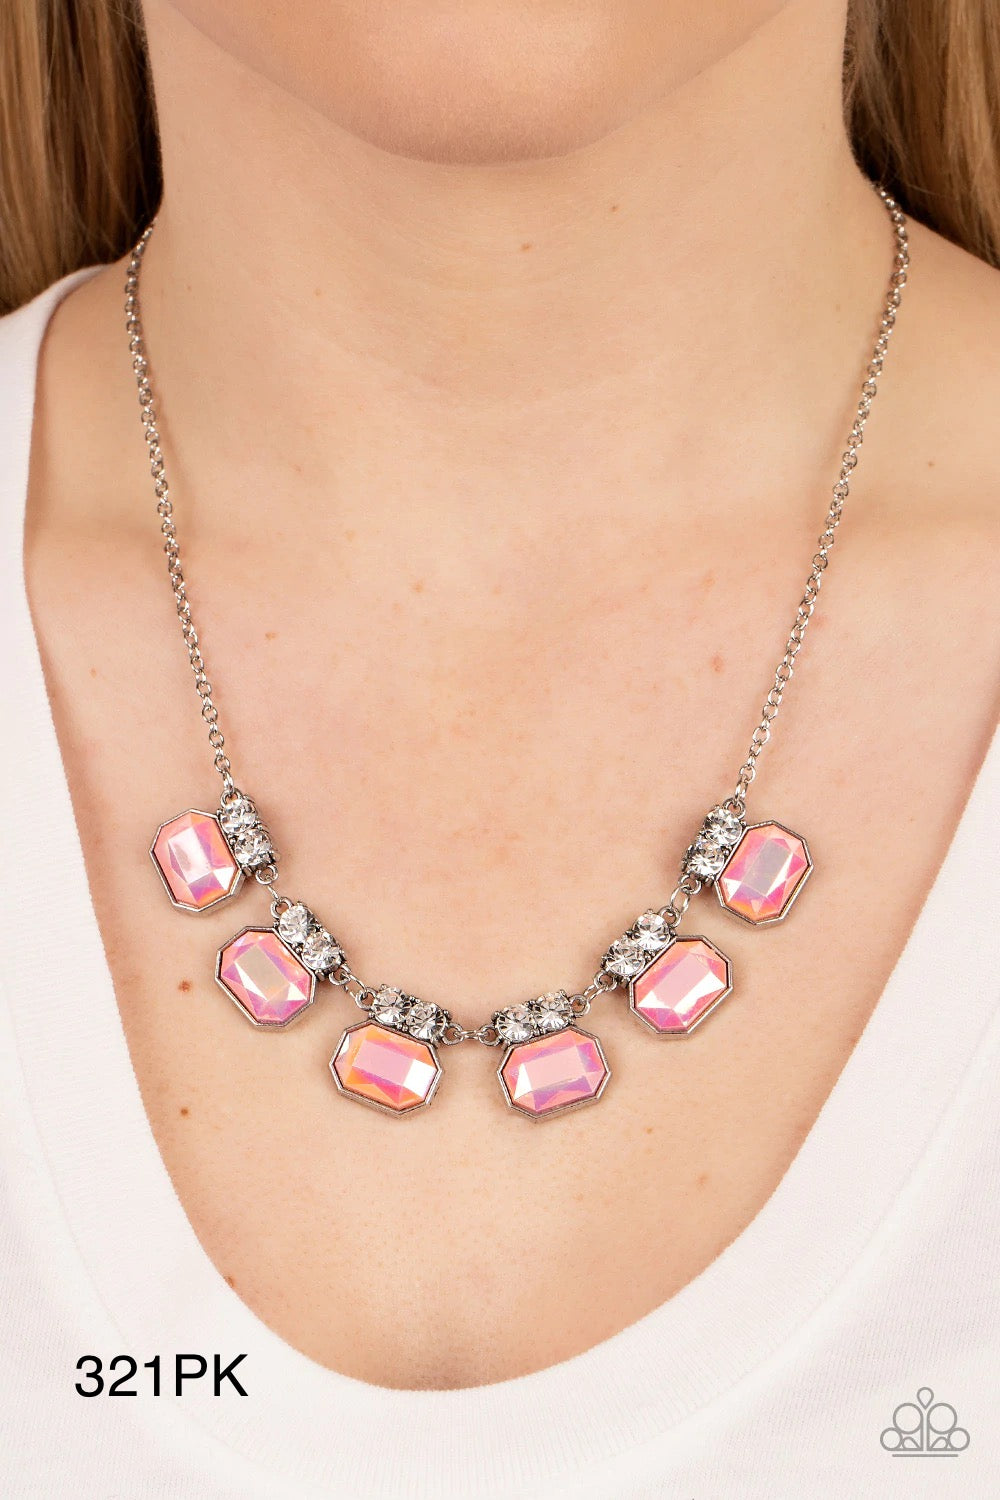 Paparazzi “Interstellar Inspiration” Pink Necklace Earring Set